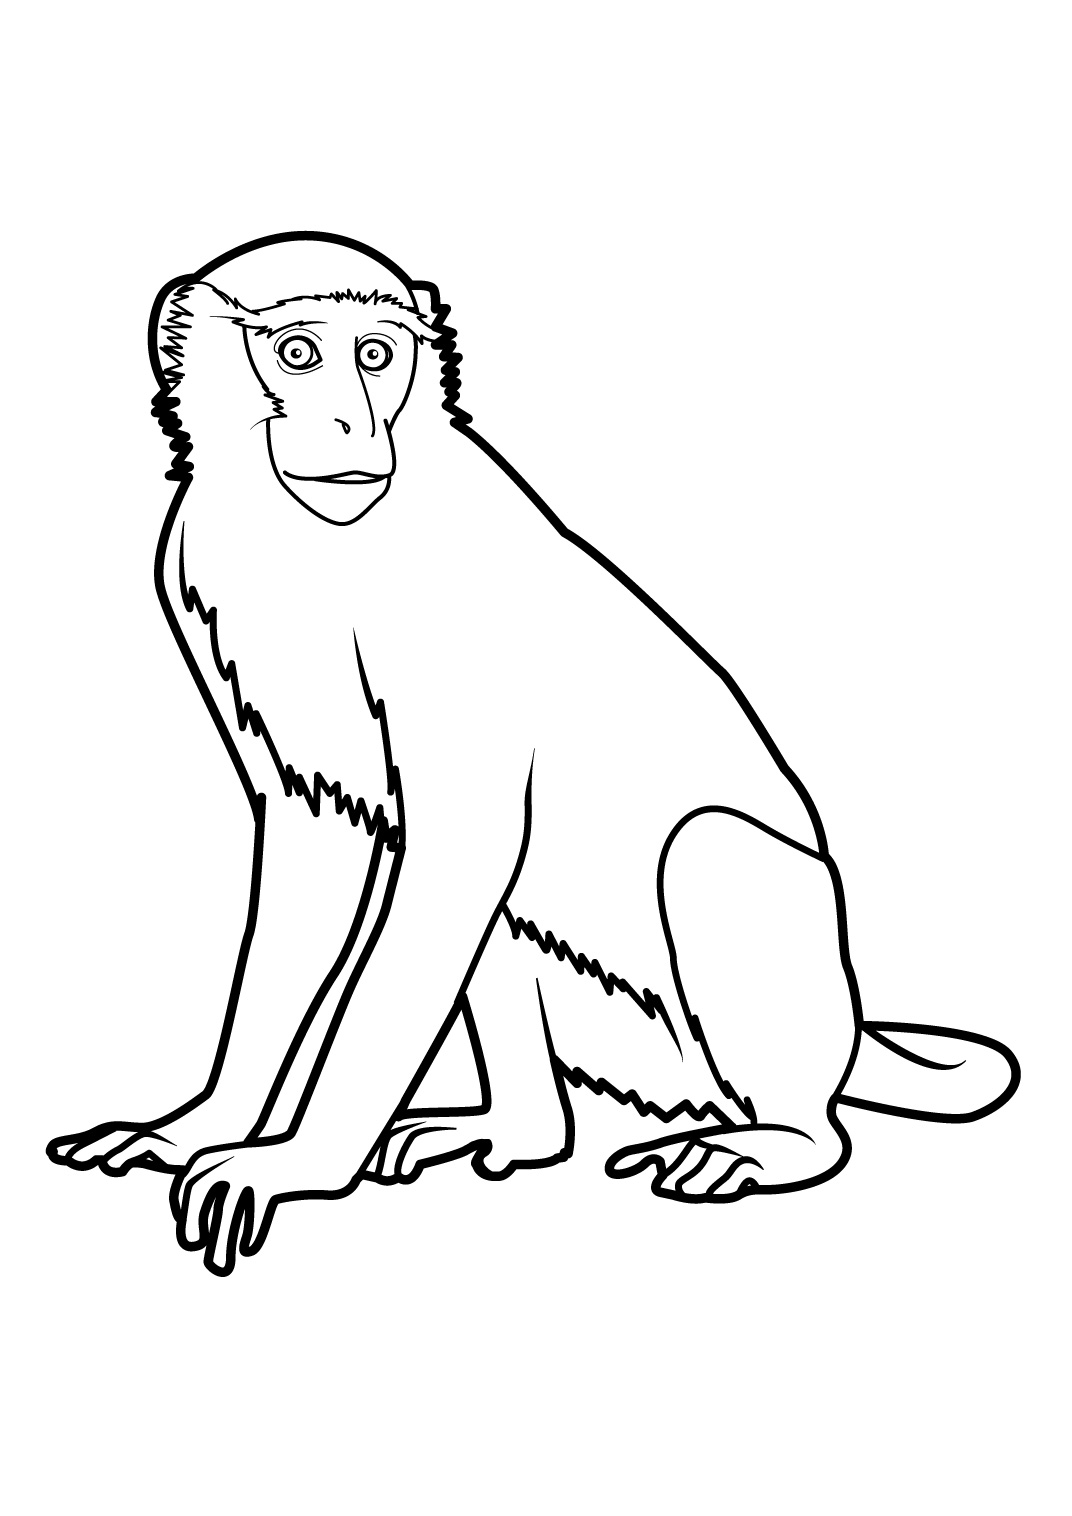 Página para colorir: Macaco (animais) #14259 - Páginas para Colorir Imprimíveis Gratuitamente